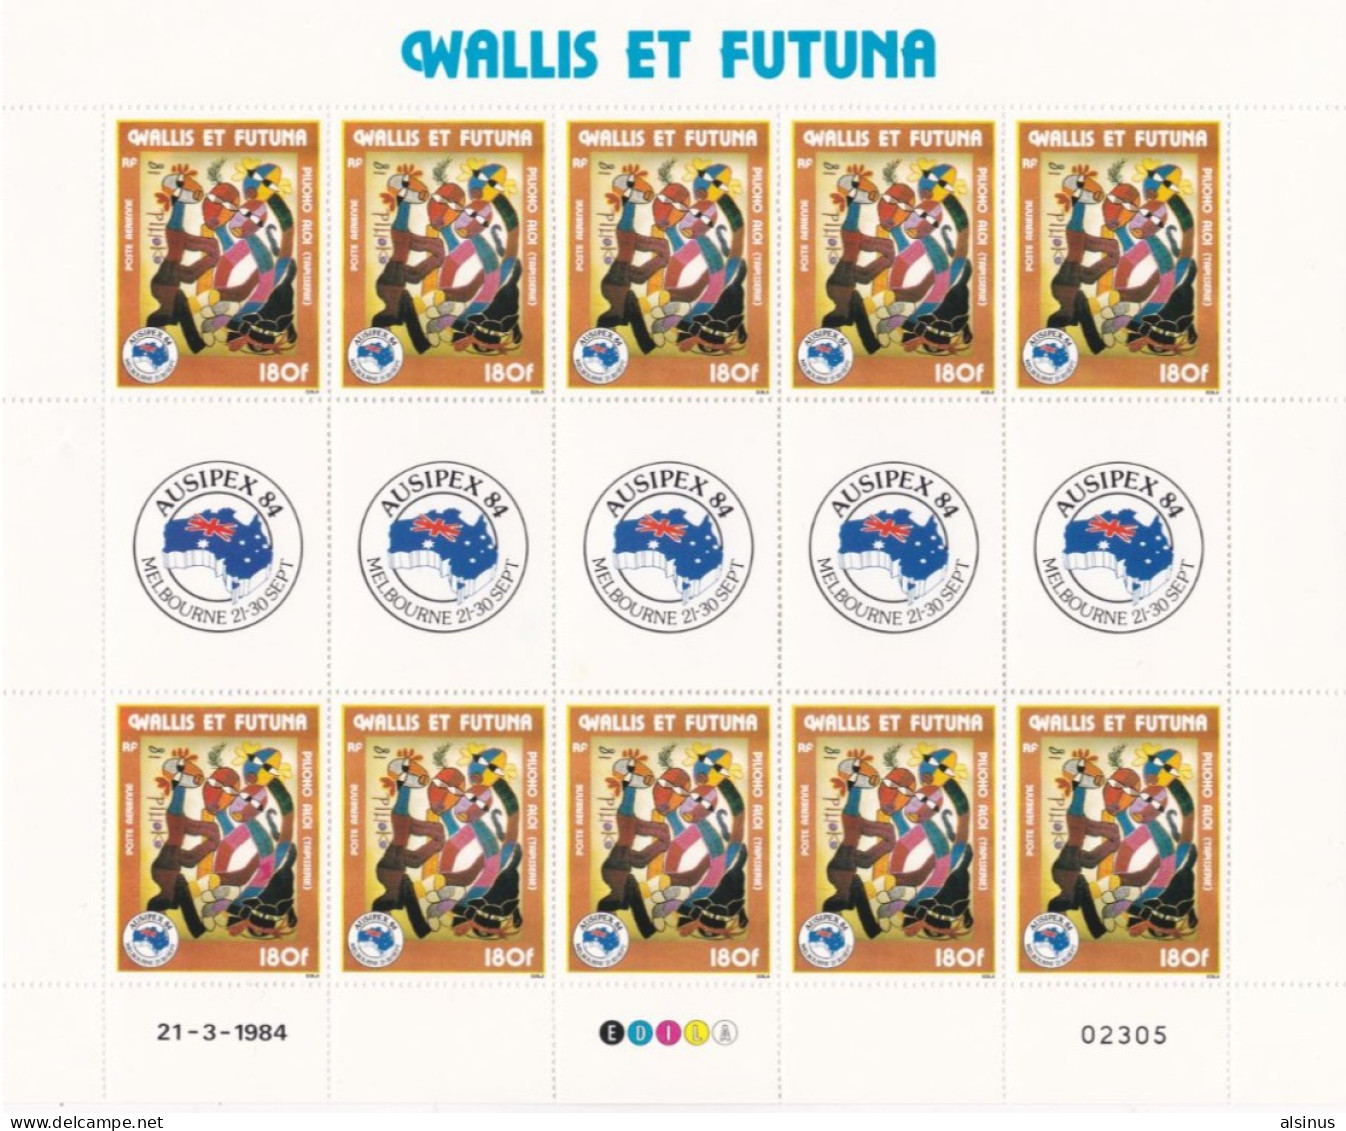 WALLIS ET FUTUNA - 1984 - N° 139 - POSTE AERIENNE - 180 F - EXPOSITION AUSIPEX 84 MELBOURNE -  FEUILLET 10 TIMBRES NEUFS - Neufs